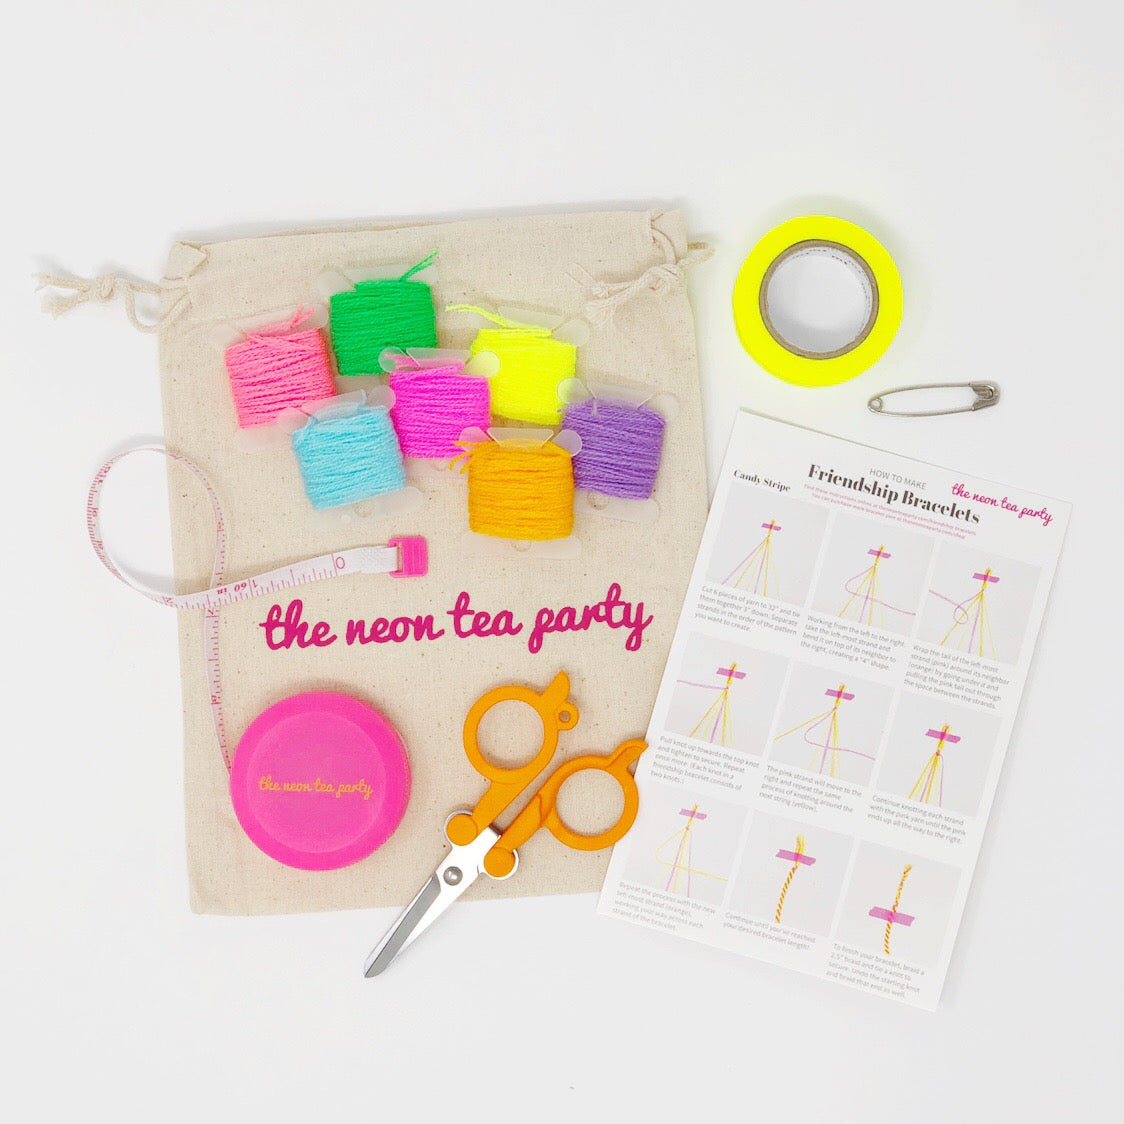 Best Friendship Bracelet Kits to Shop Online